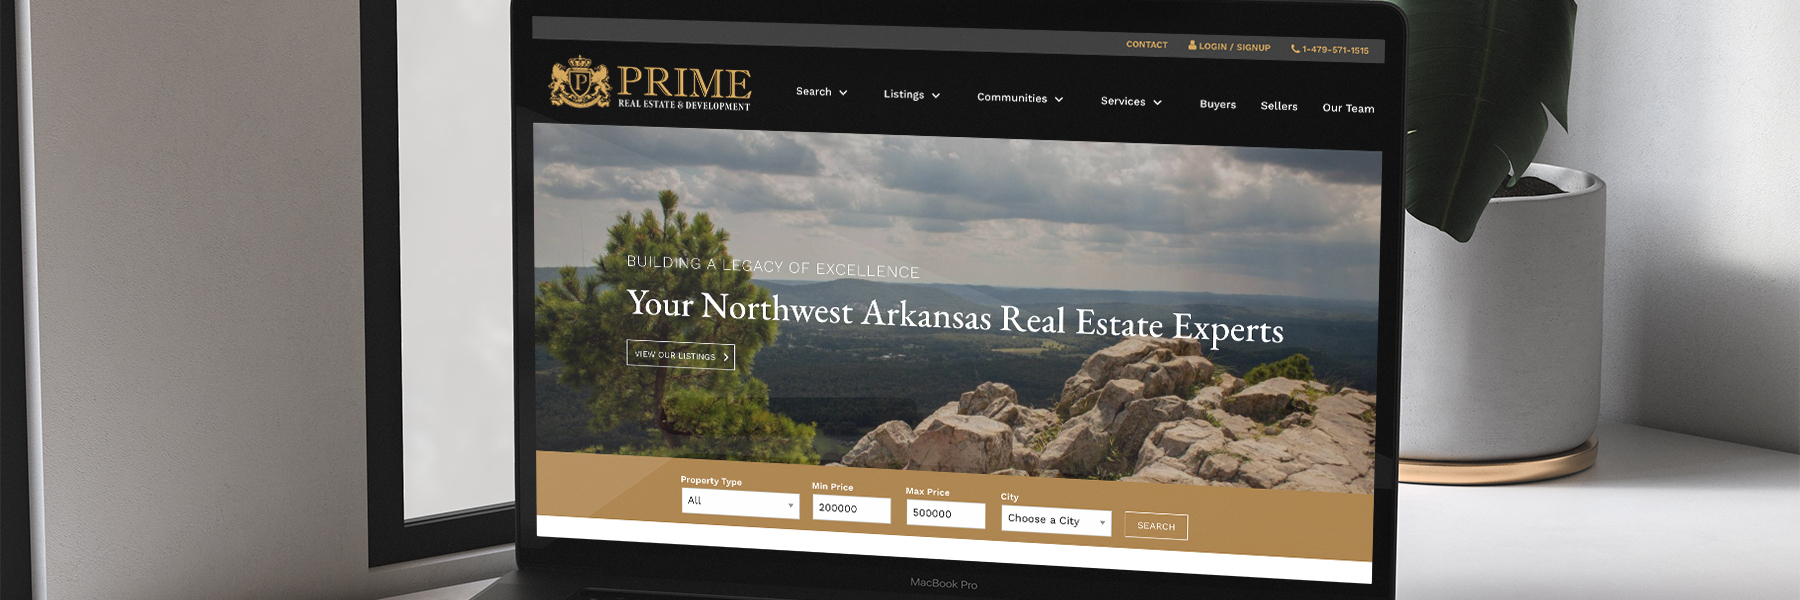 Prime Real Estate & Development website homepage on laptop